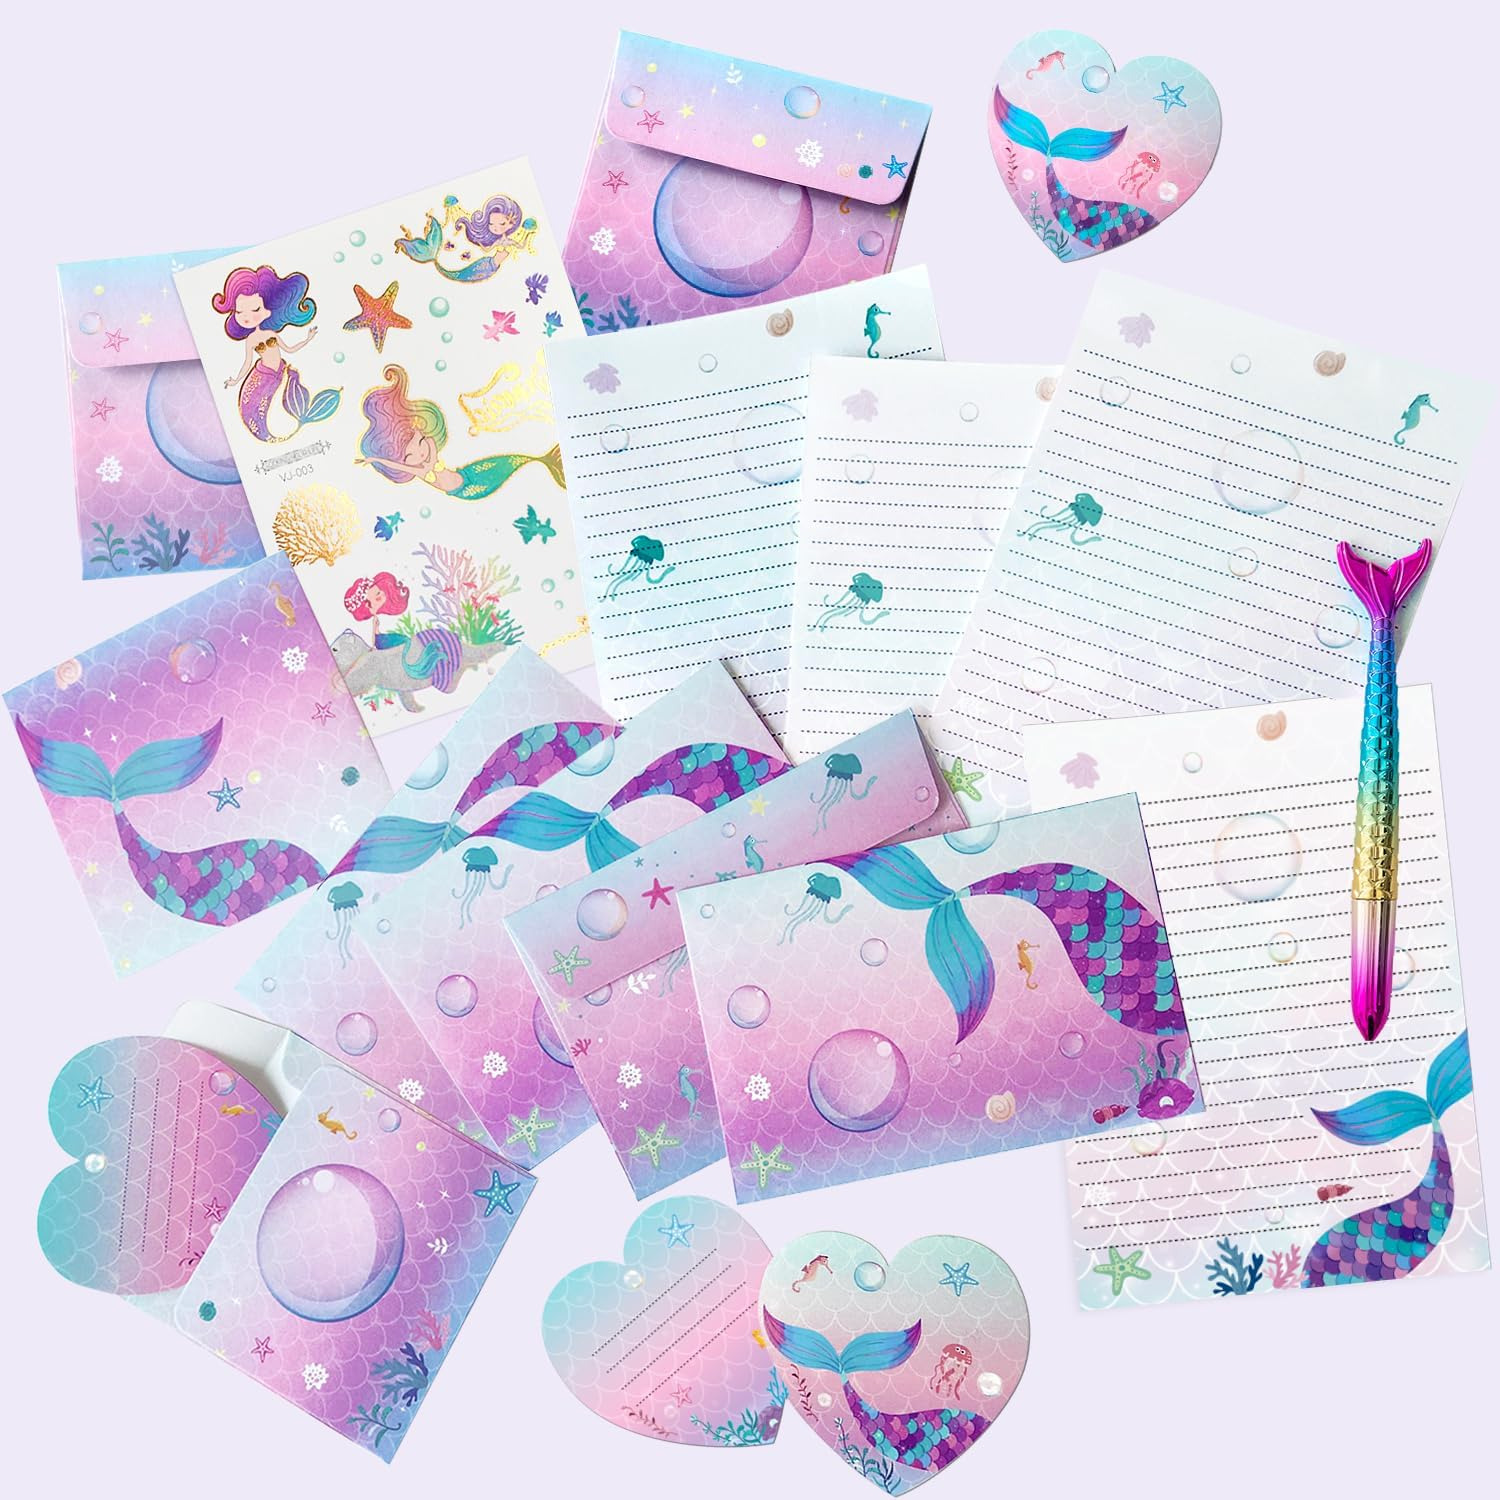 Mermaid Stationery Set Gift for Girl - 20 Mermaid -Style Paper Sheets + 10 Envel